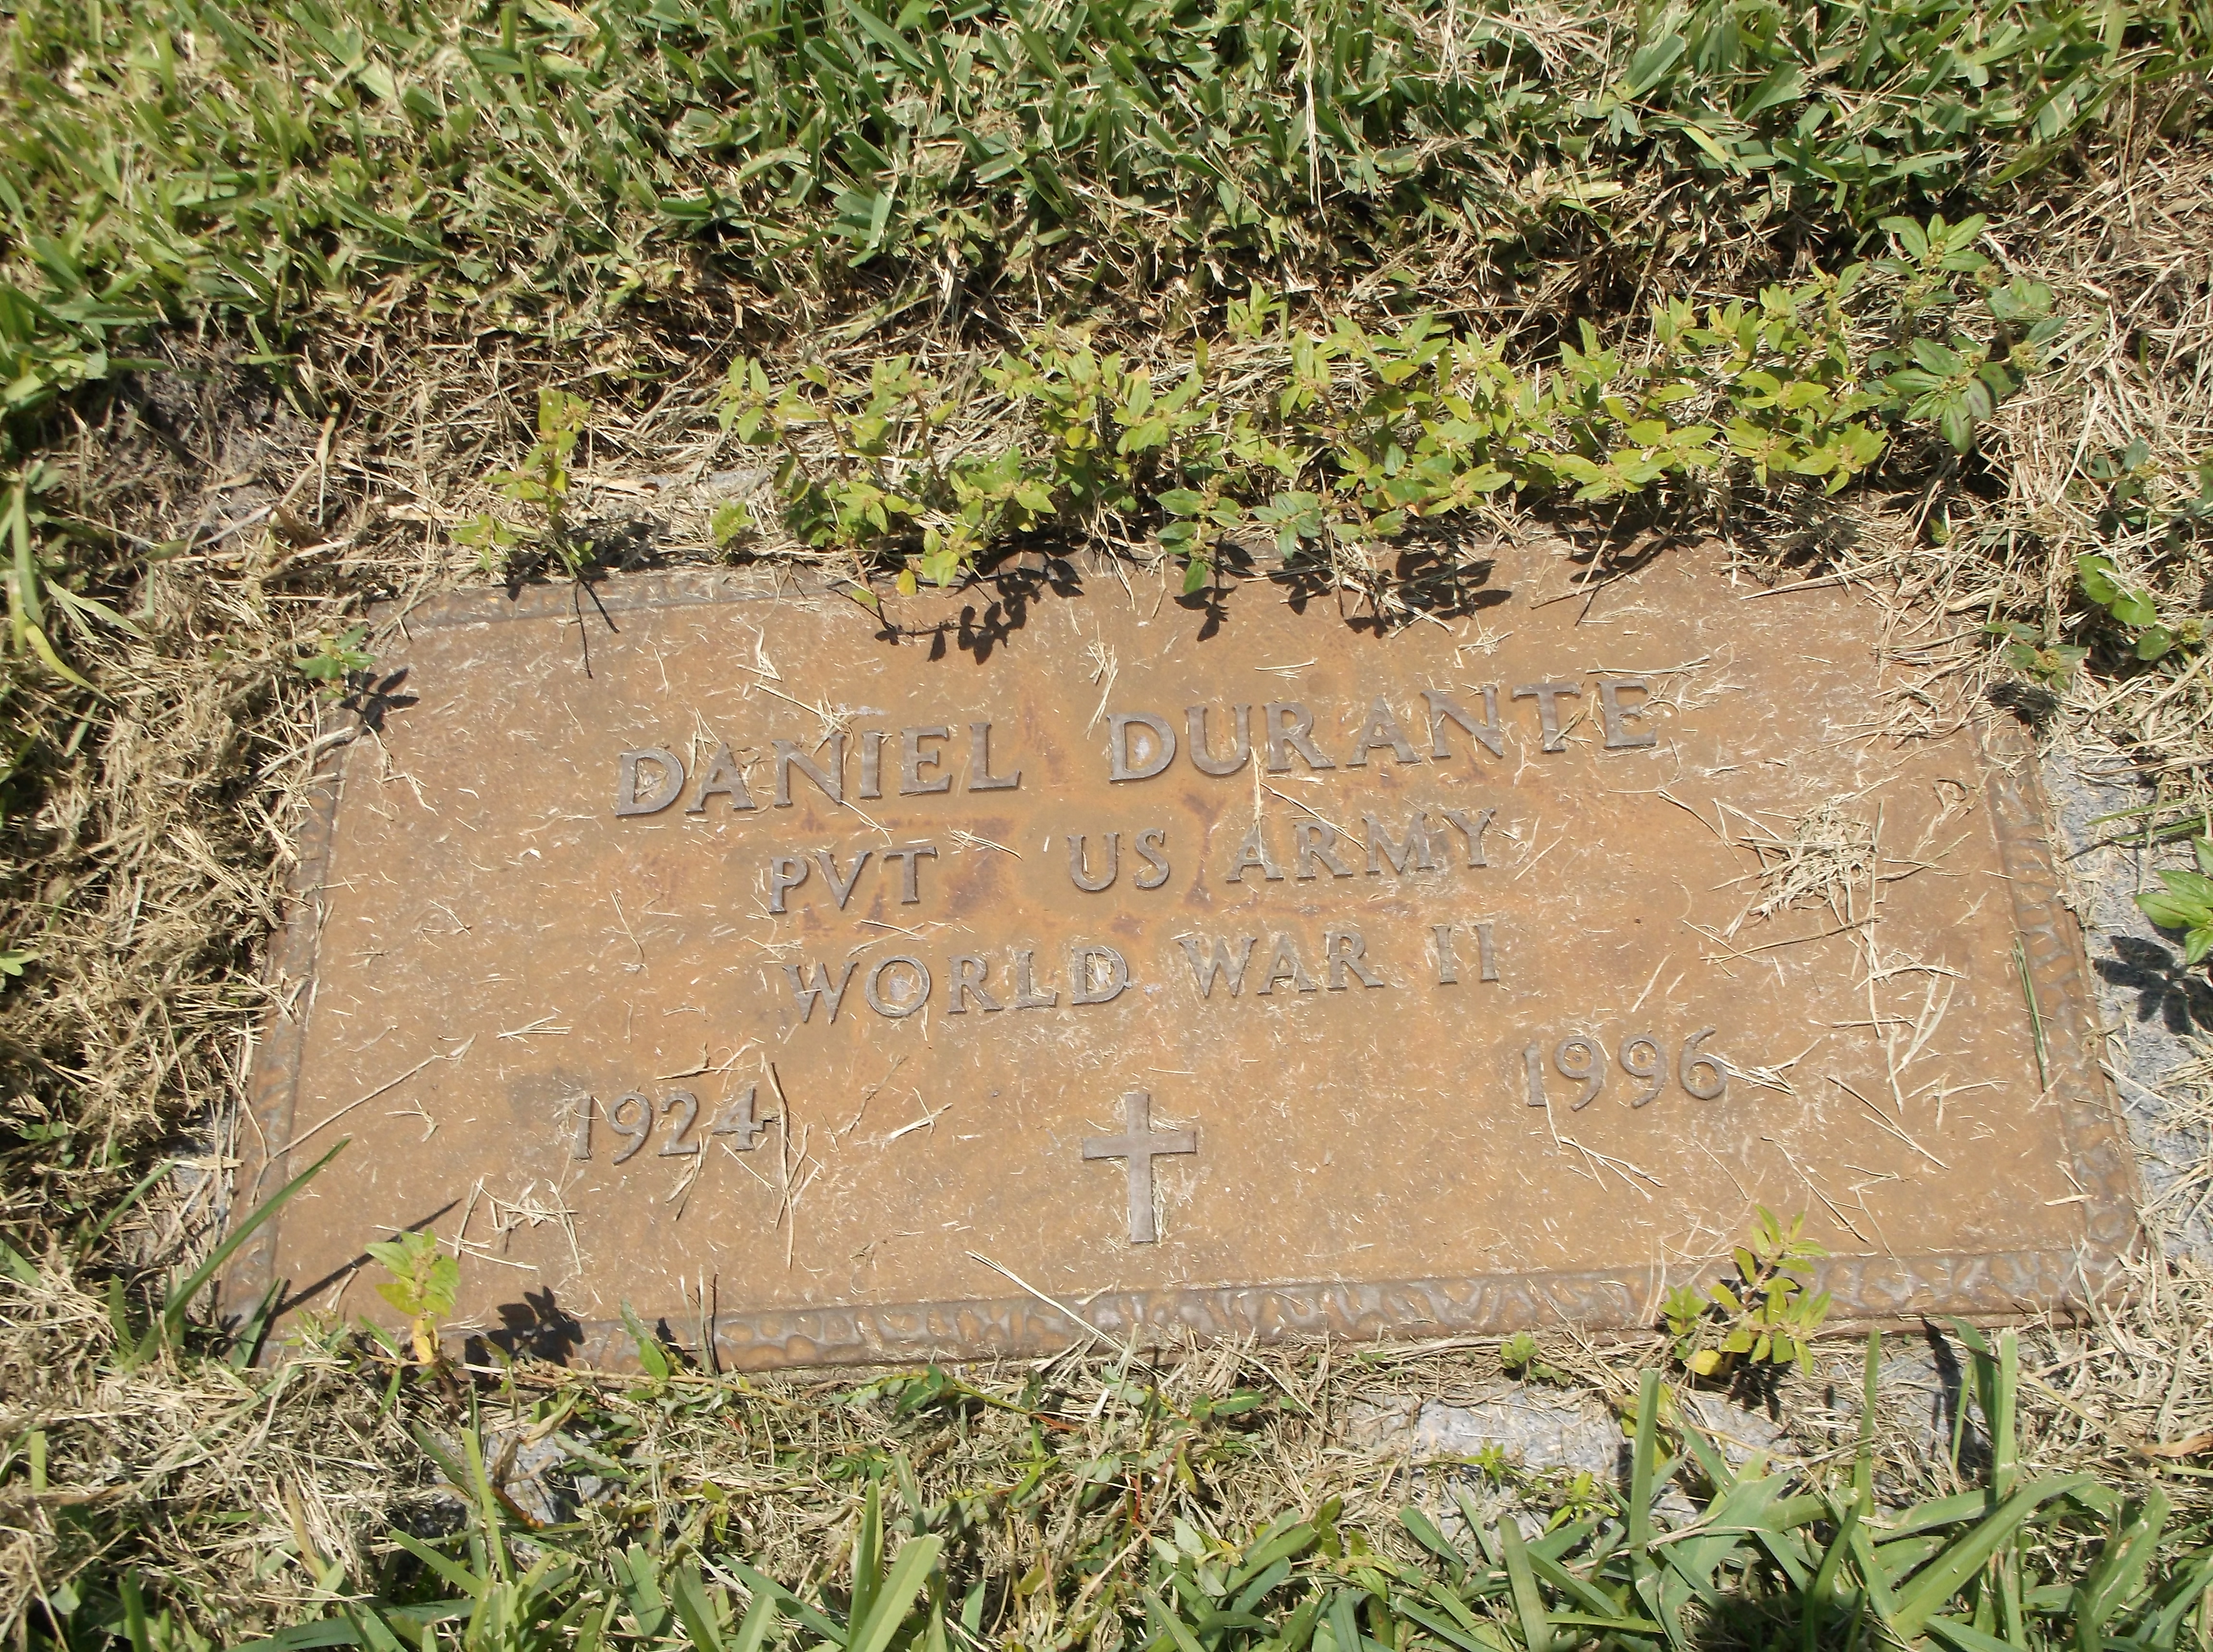 Daniel Durante